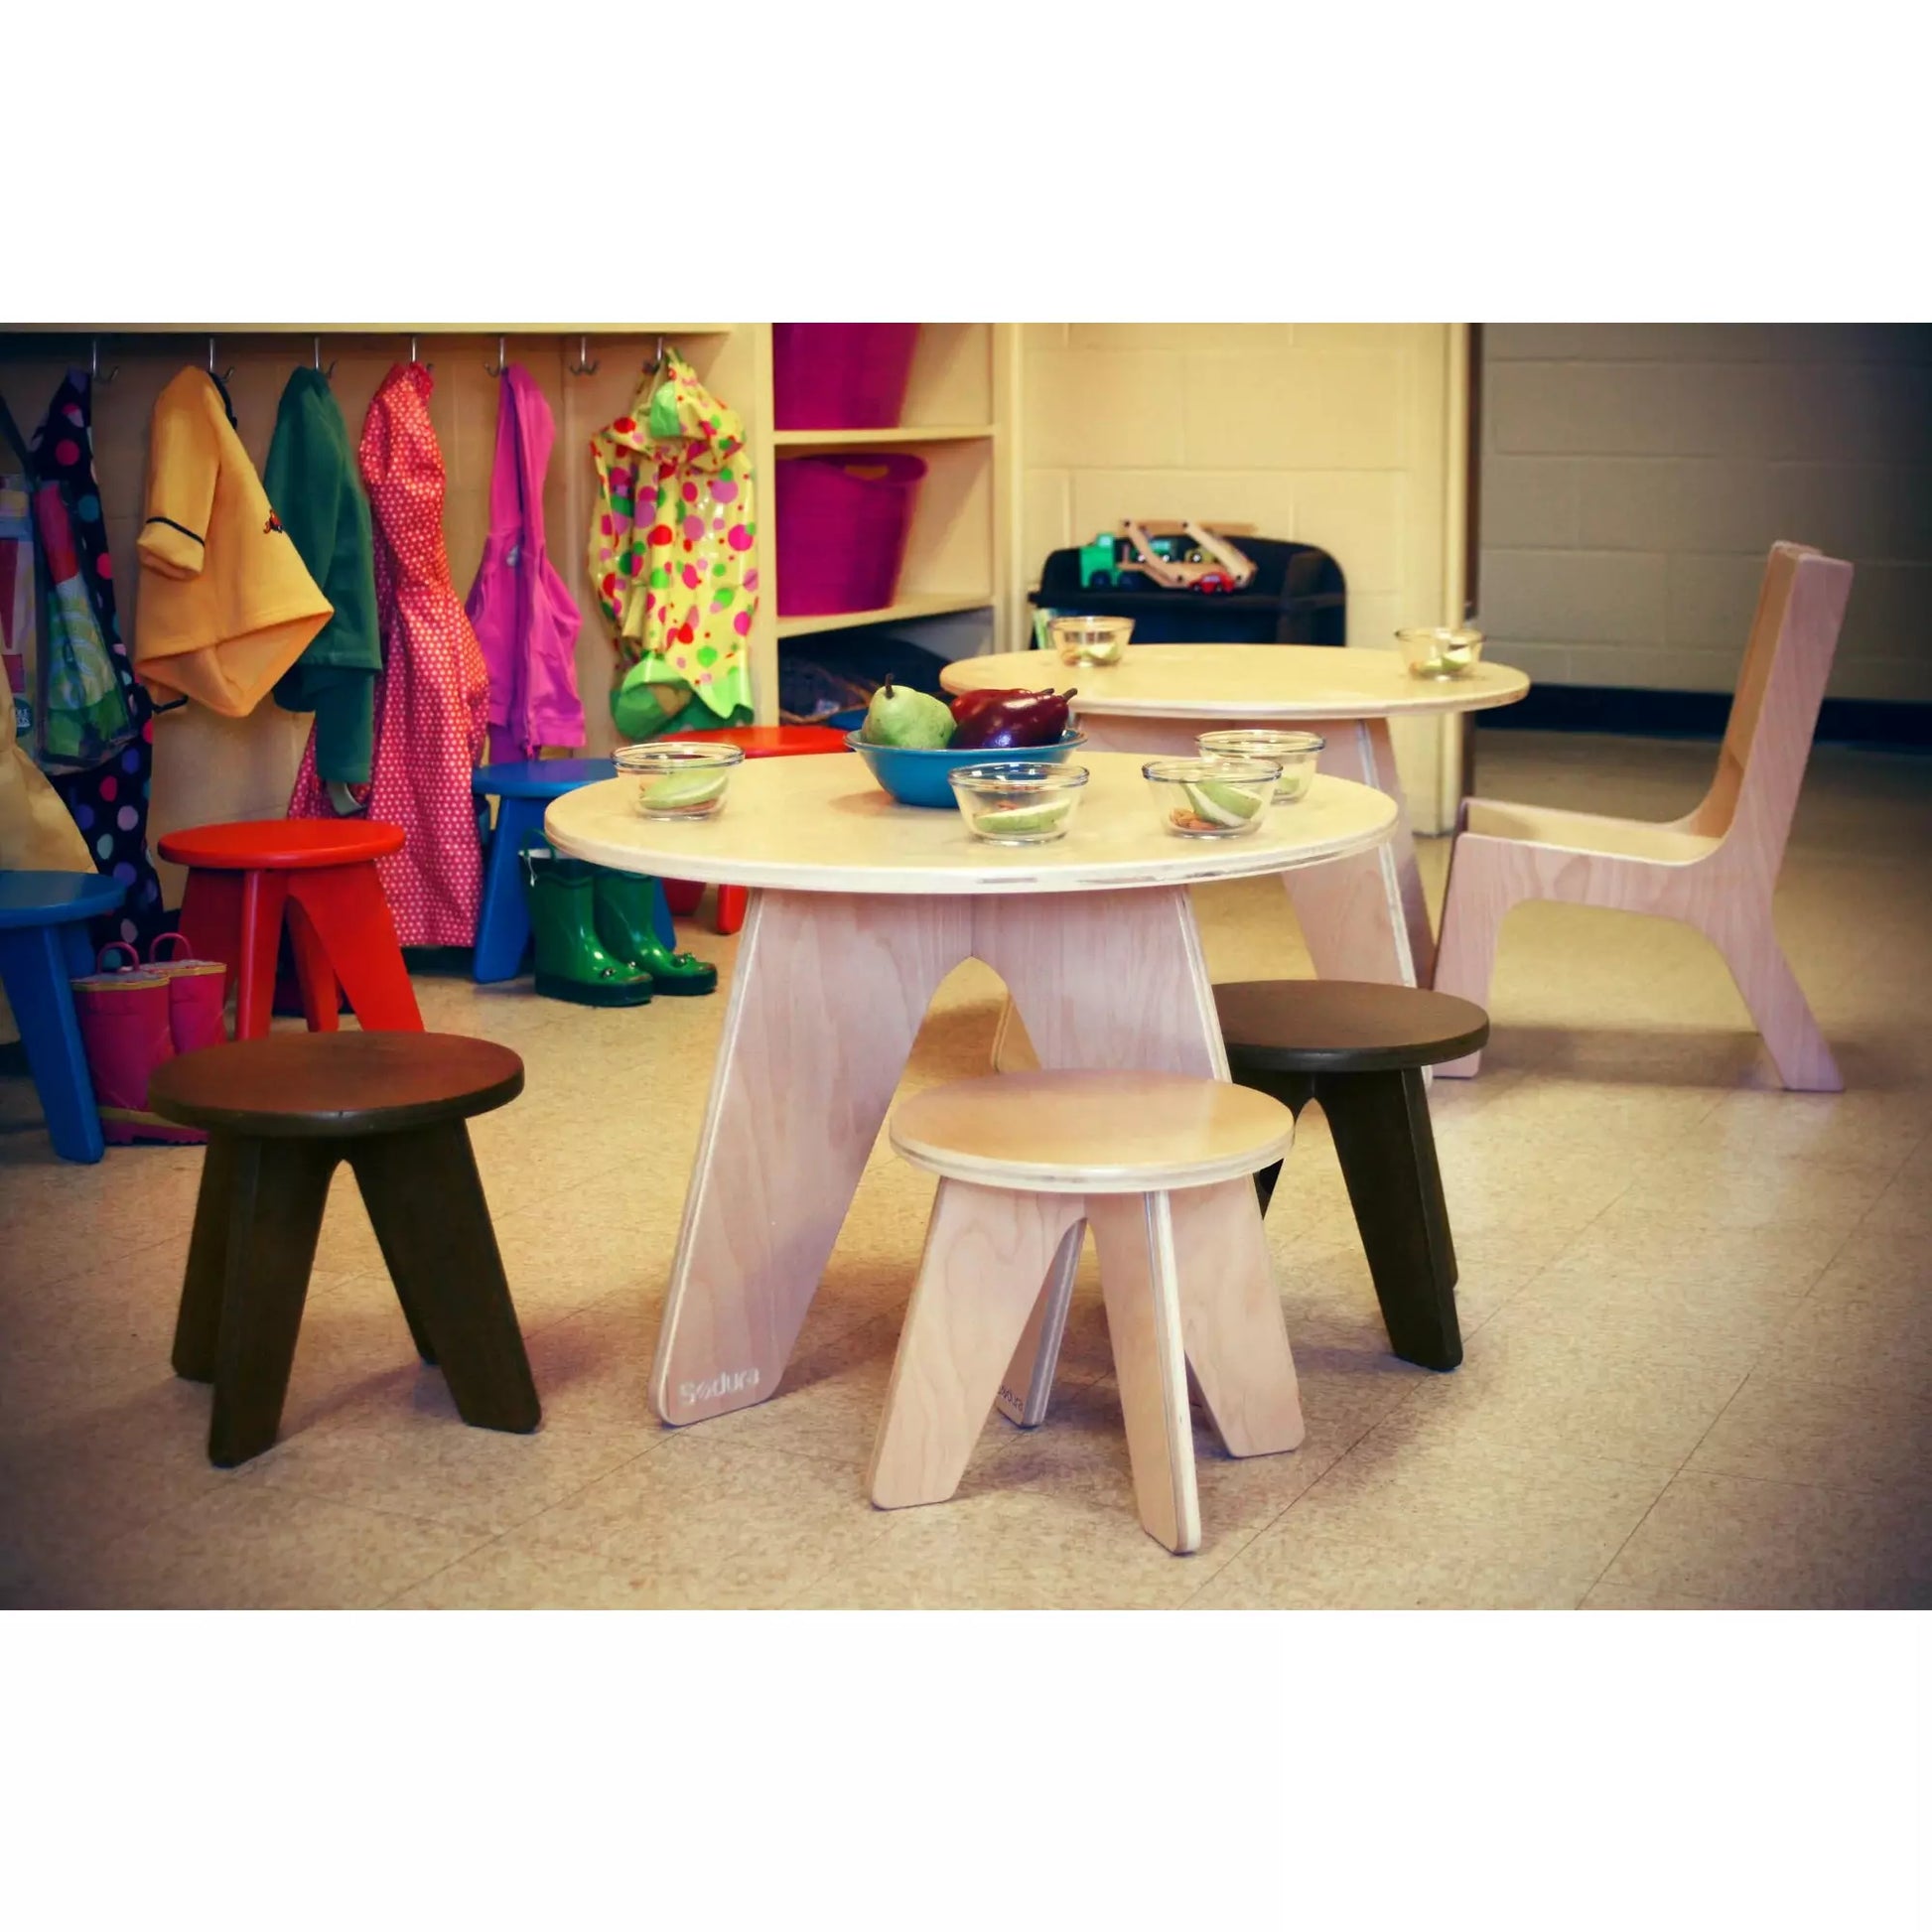 LITTLE COLORADO SODURA AERO TABLE & STOOLS (2) SET - Fancy Nursery